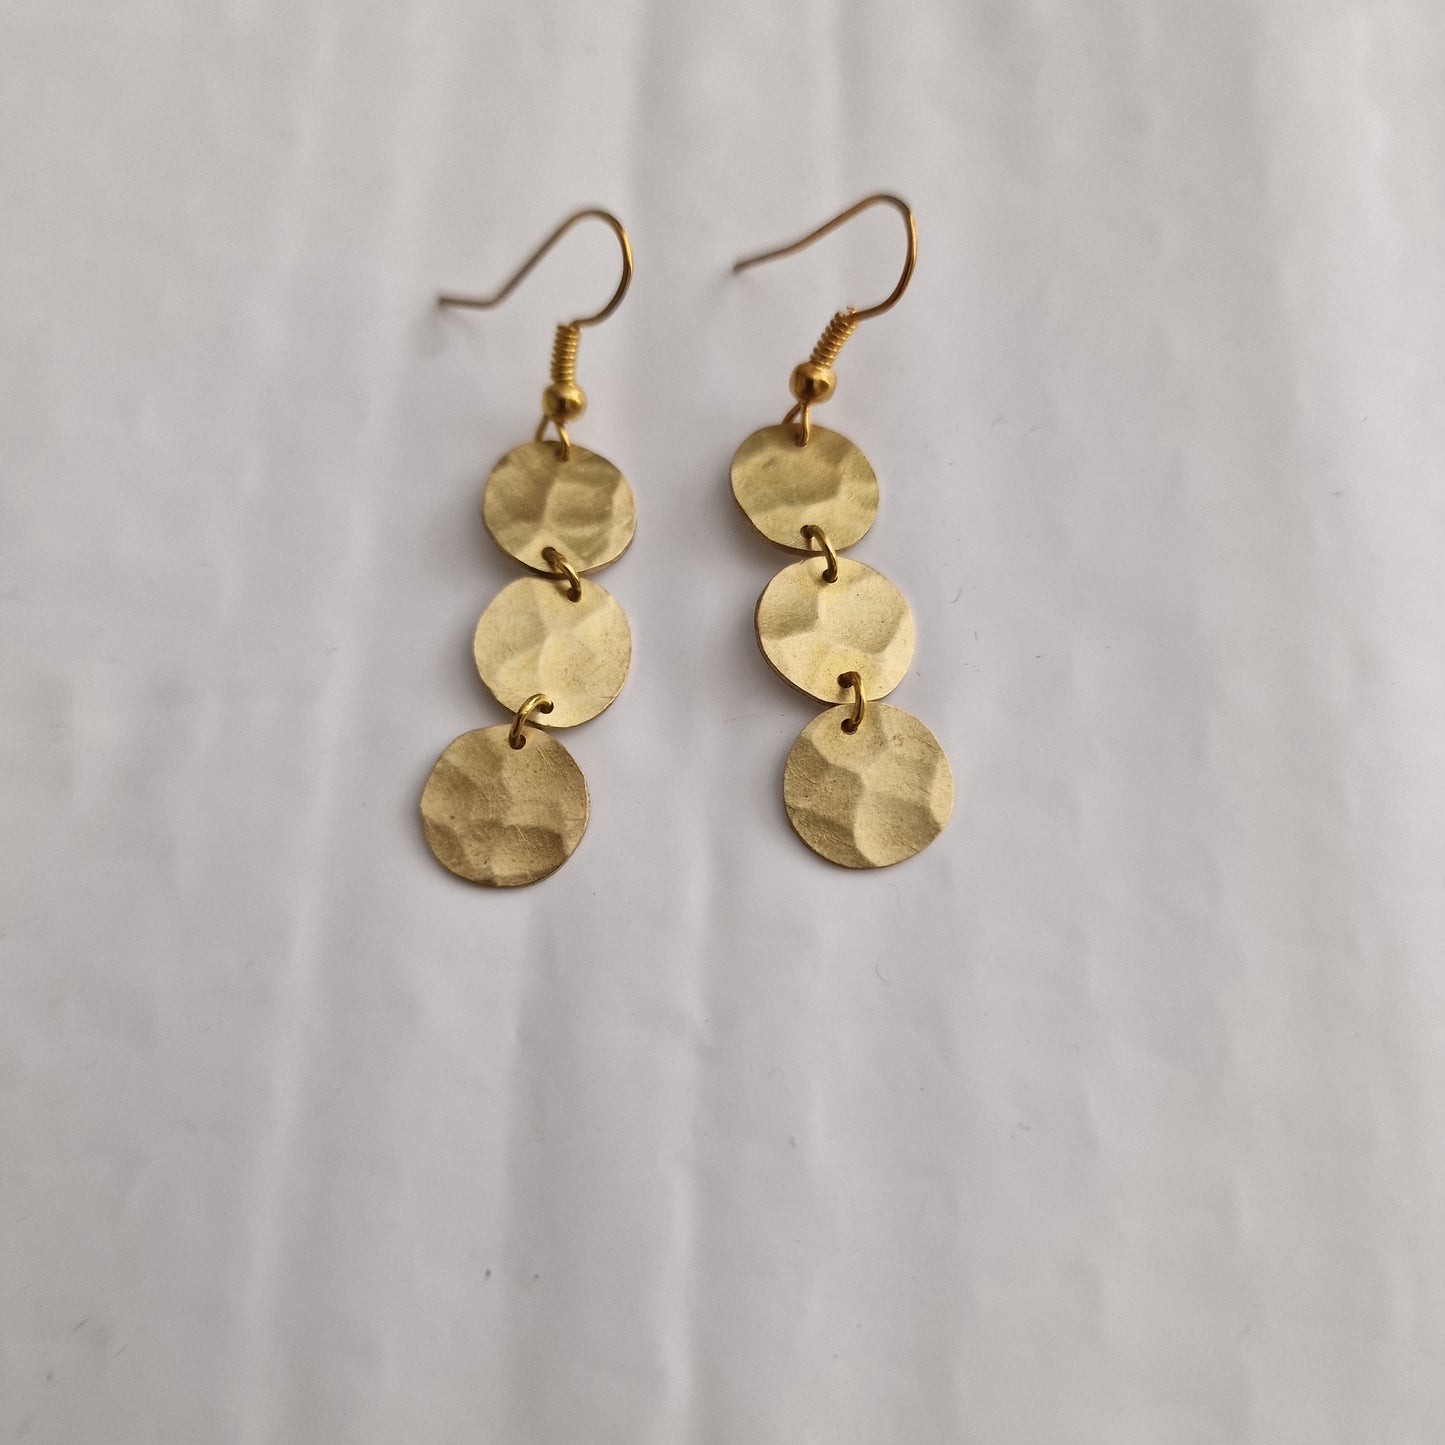 Circular brass geometric pendant earrings